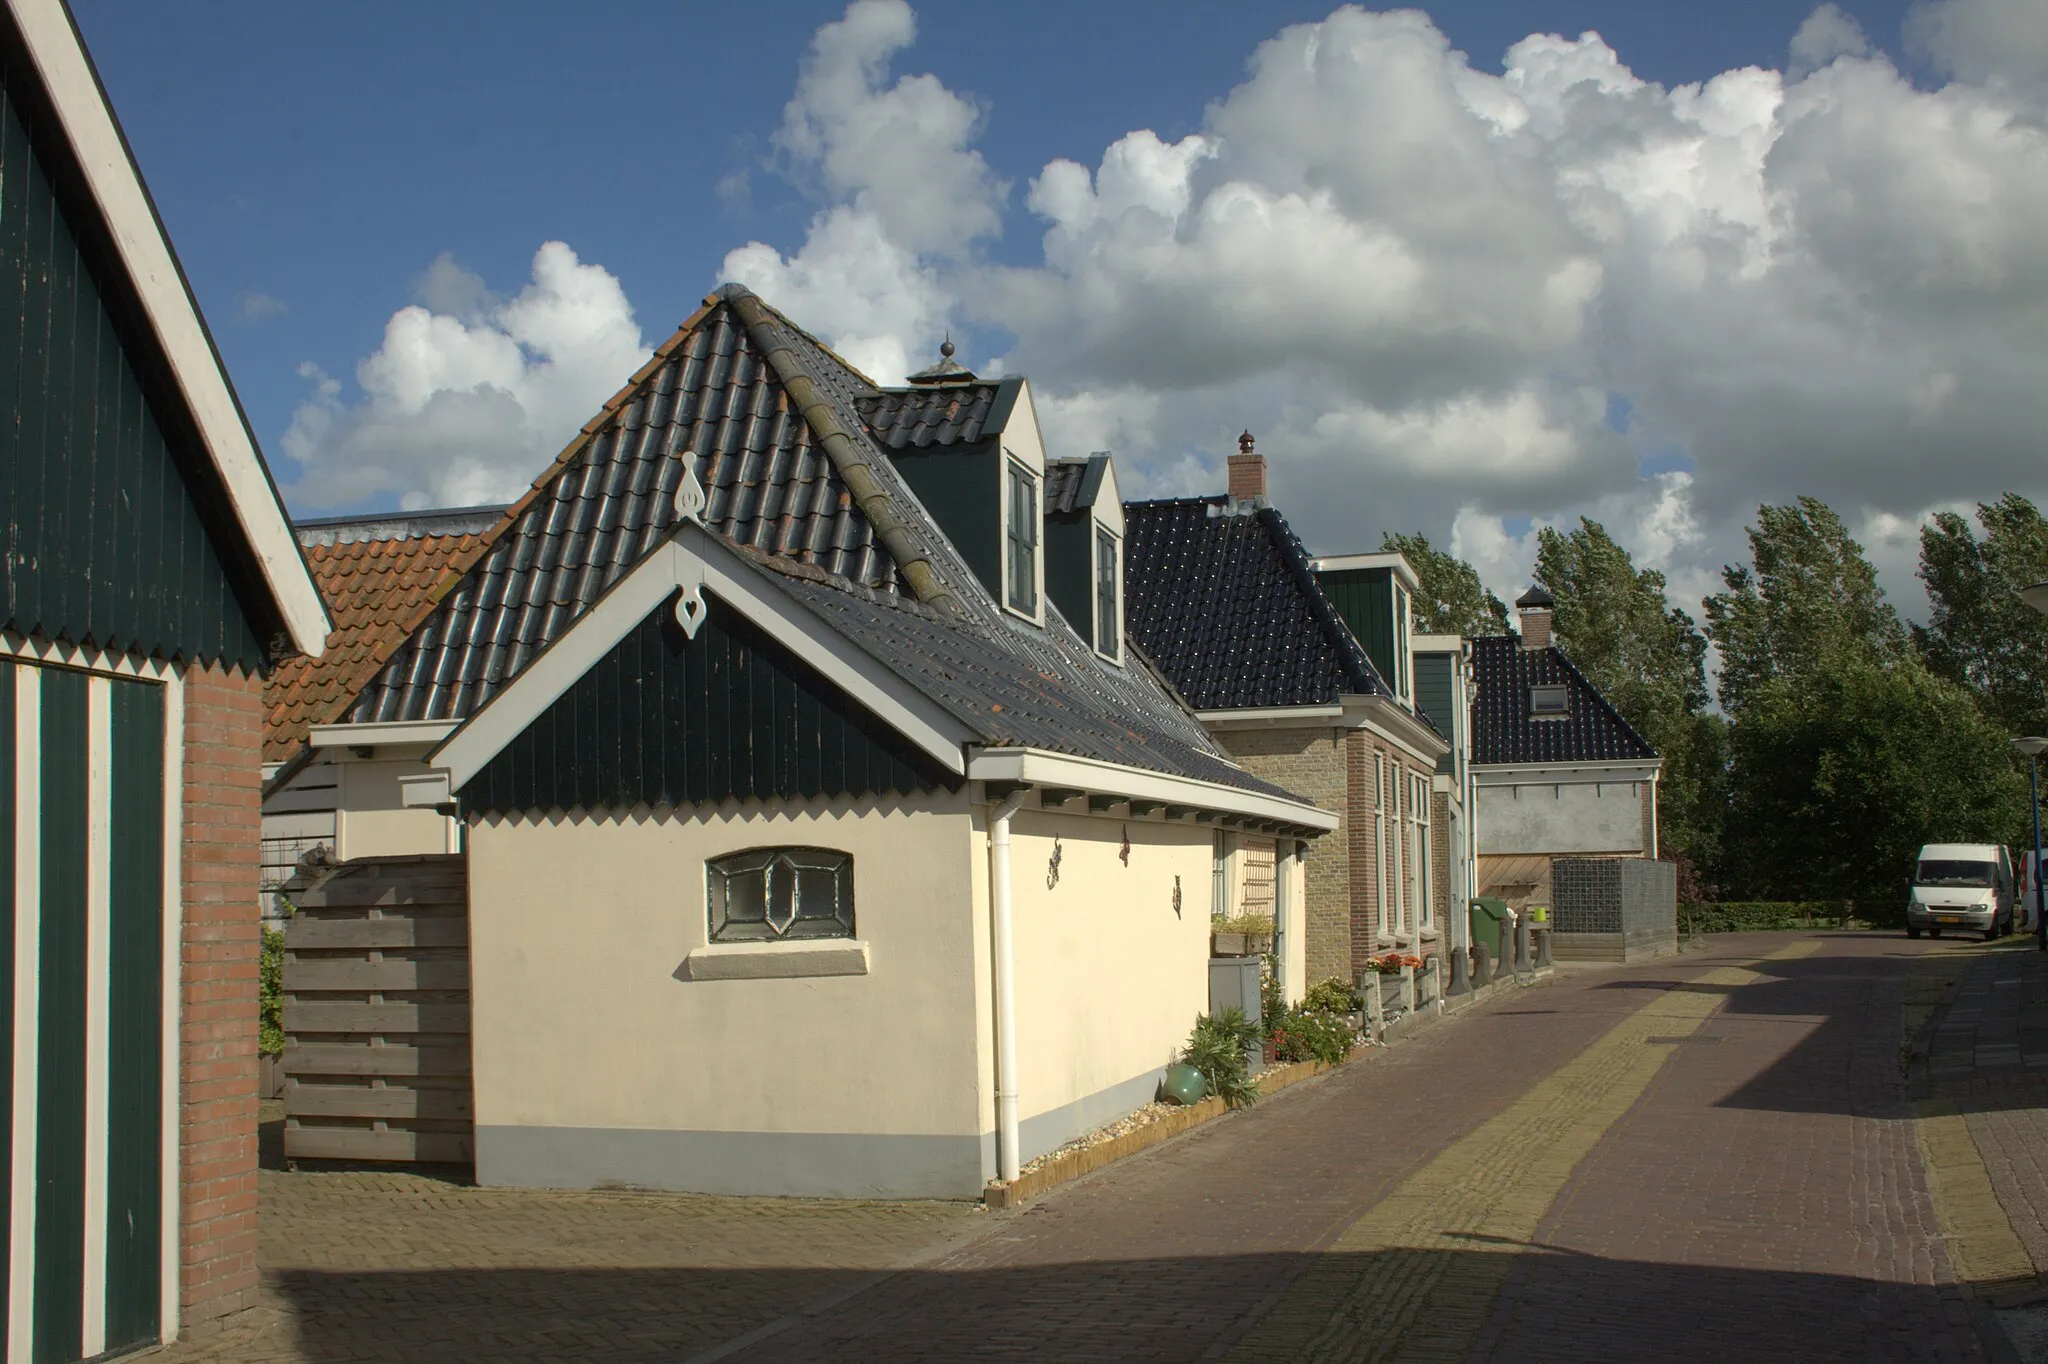 Photo showing: Op straat in het mooie dorp Wjelsryp in de gemeente Littenseradiel in Friesland..